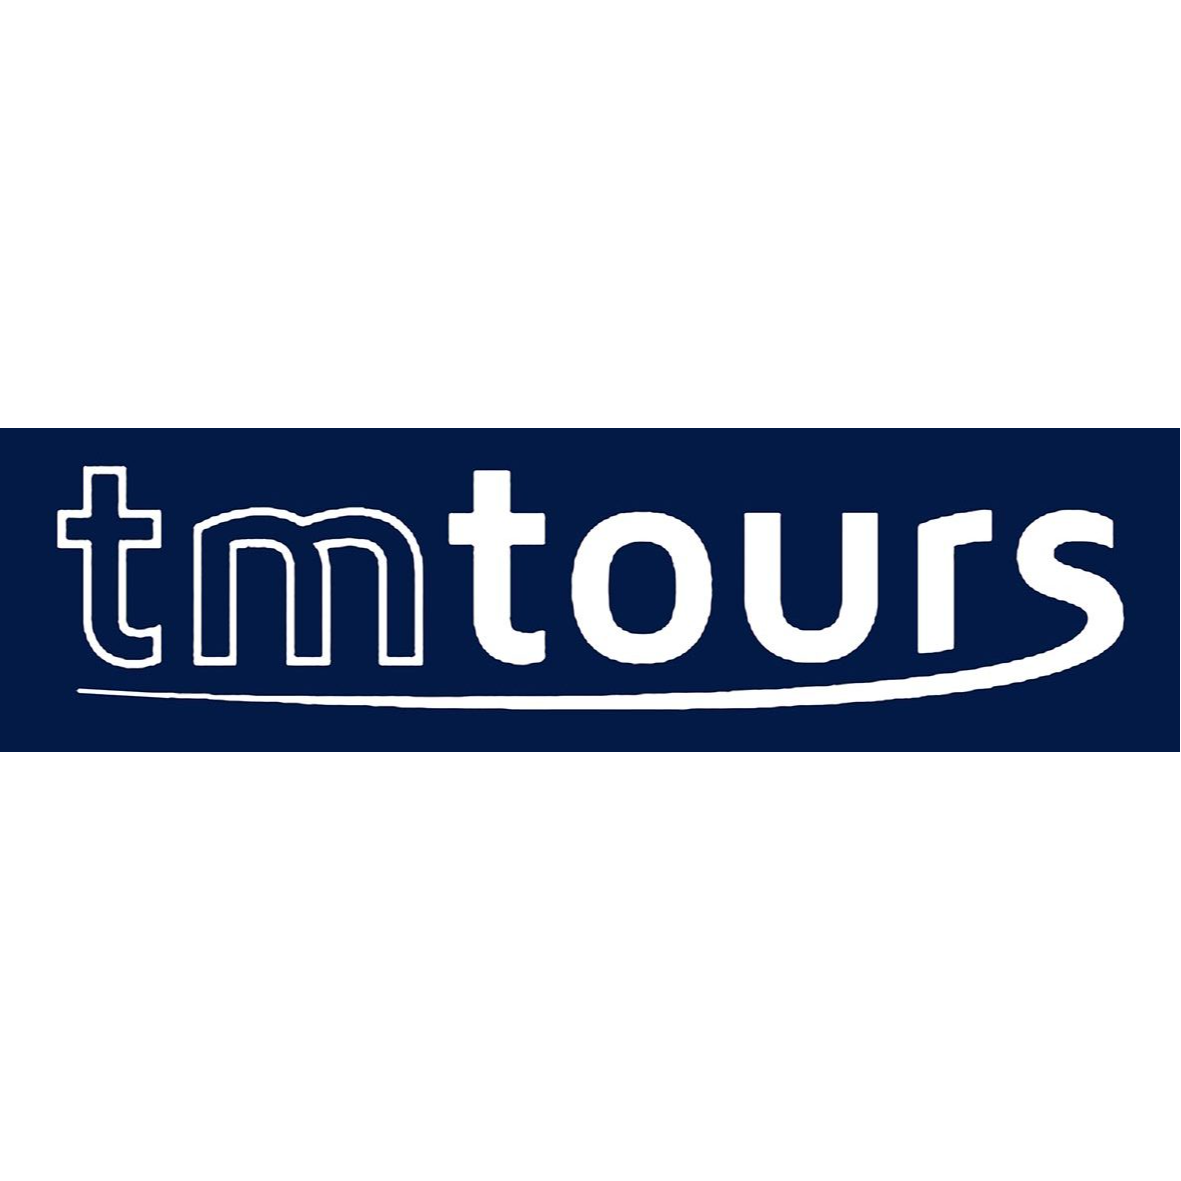 tmtours in Oberderdingen - Logo